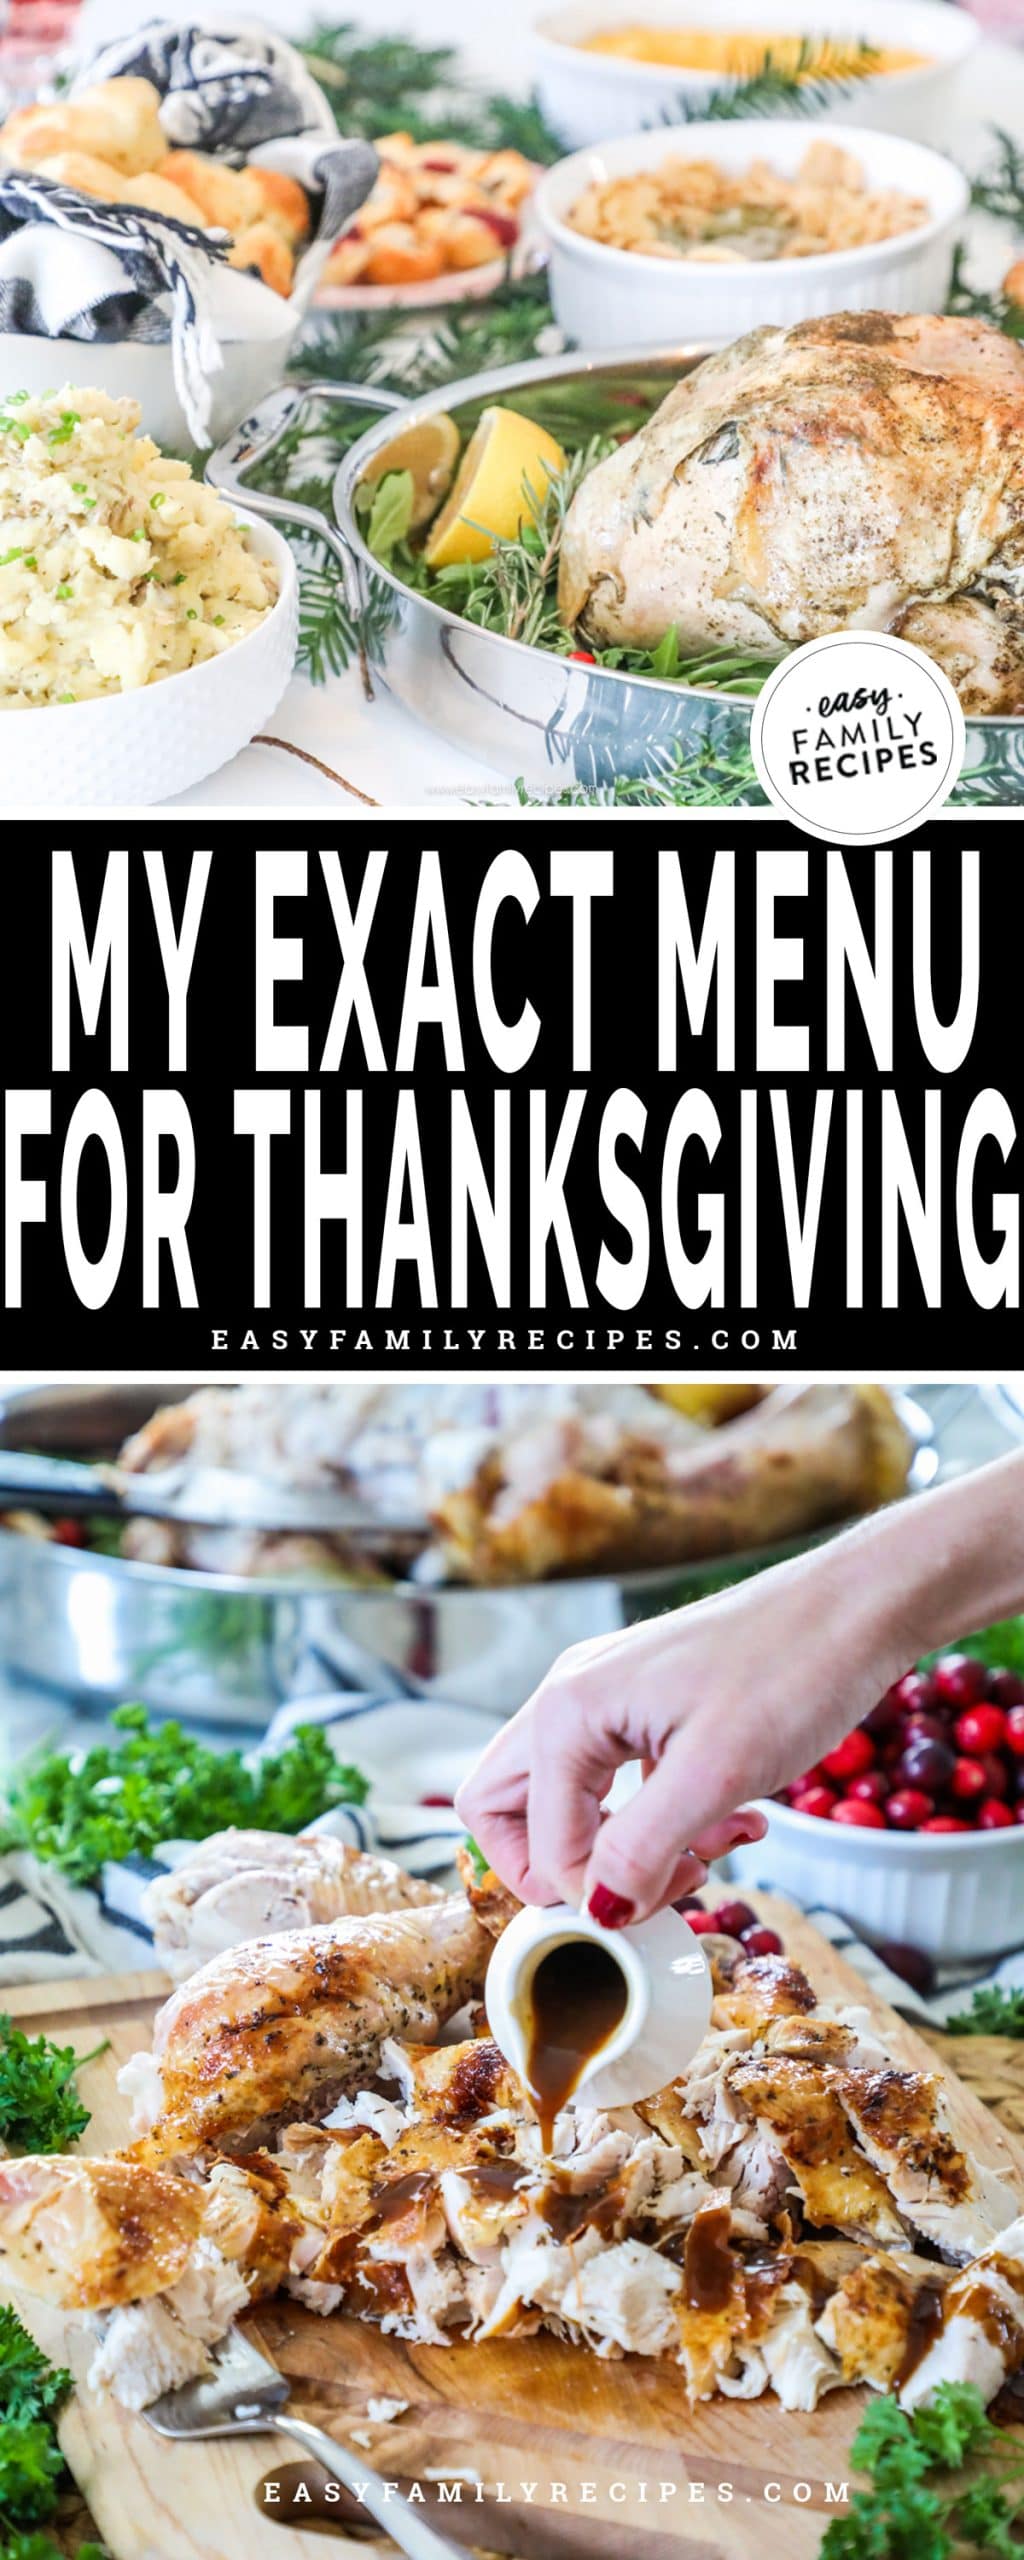 Thanksgiving menu prepared for family